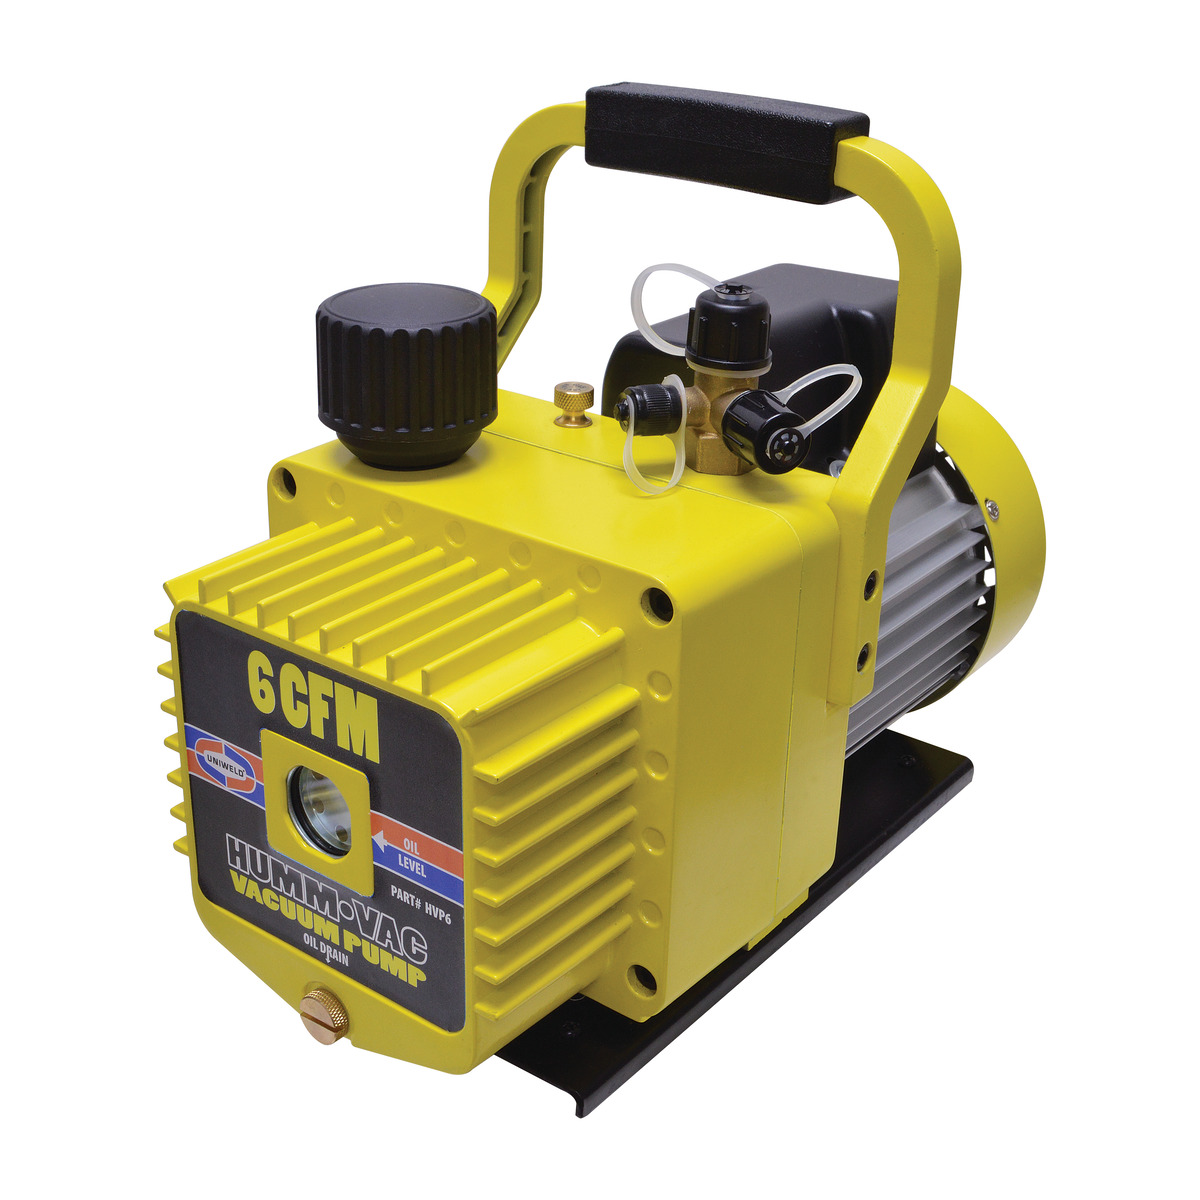 Uniweld HVP12 Humm-vac 12 CFM Vacuum Pump for sale online 